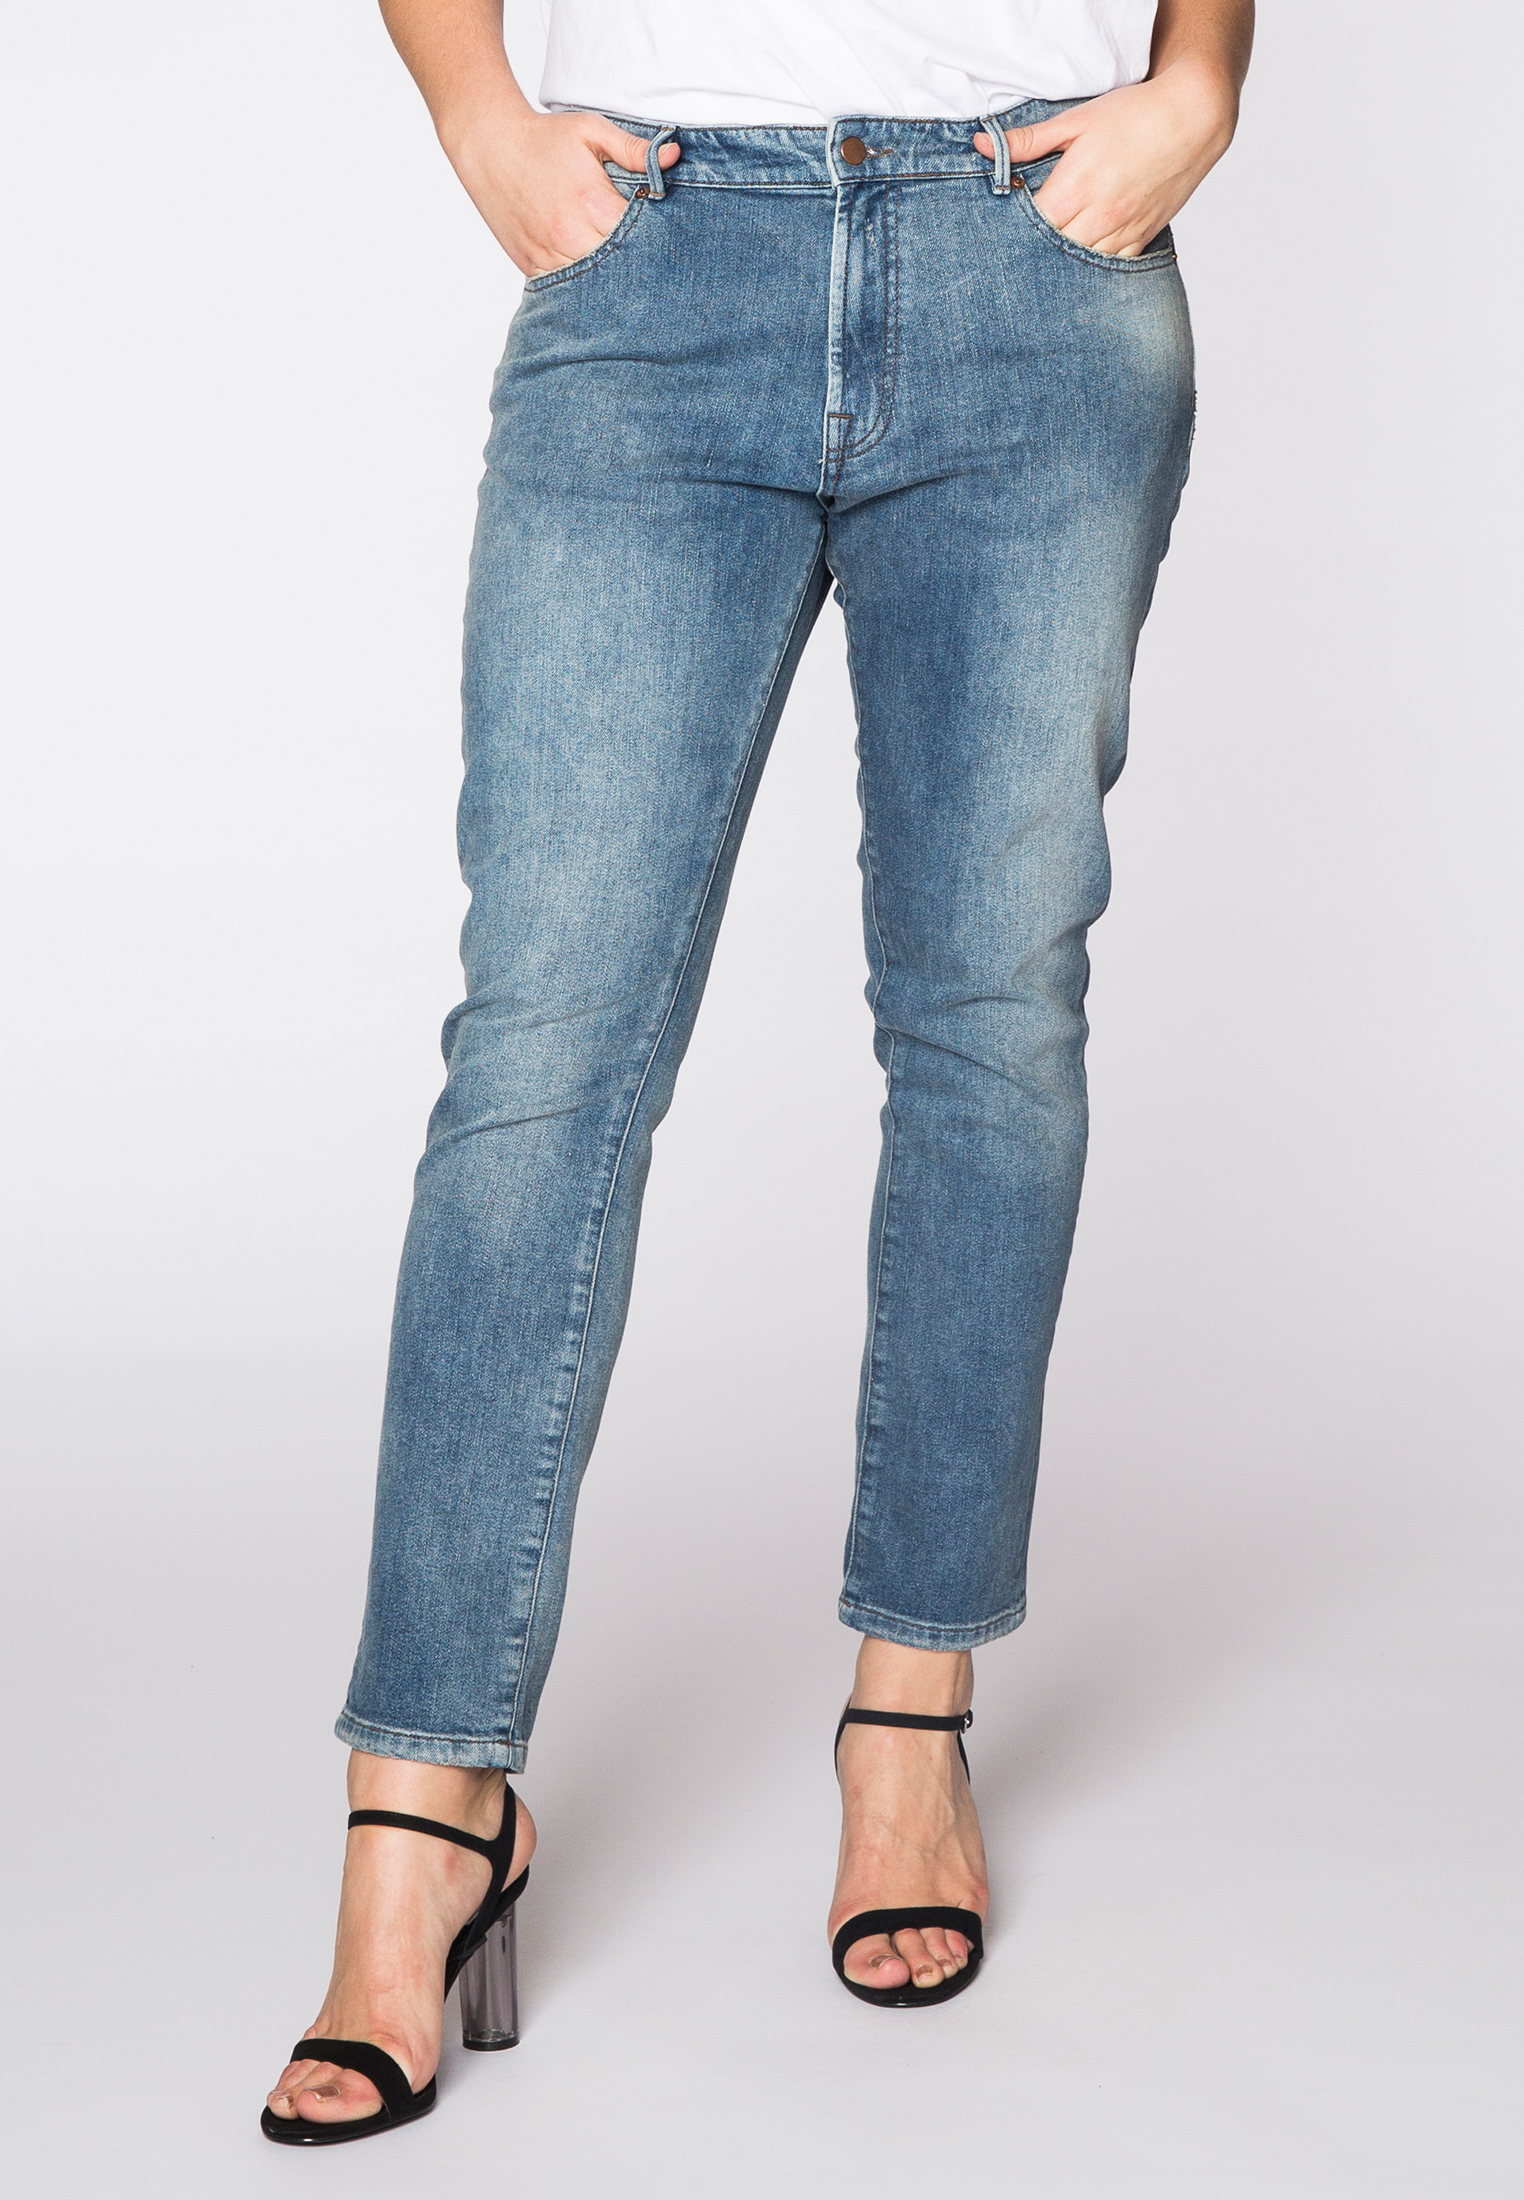 44 inch waist jeans